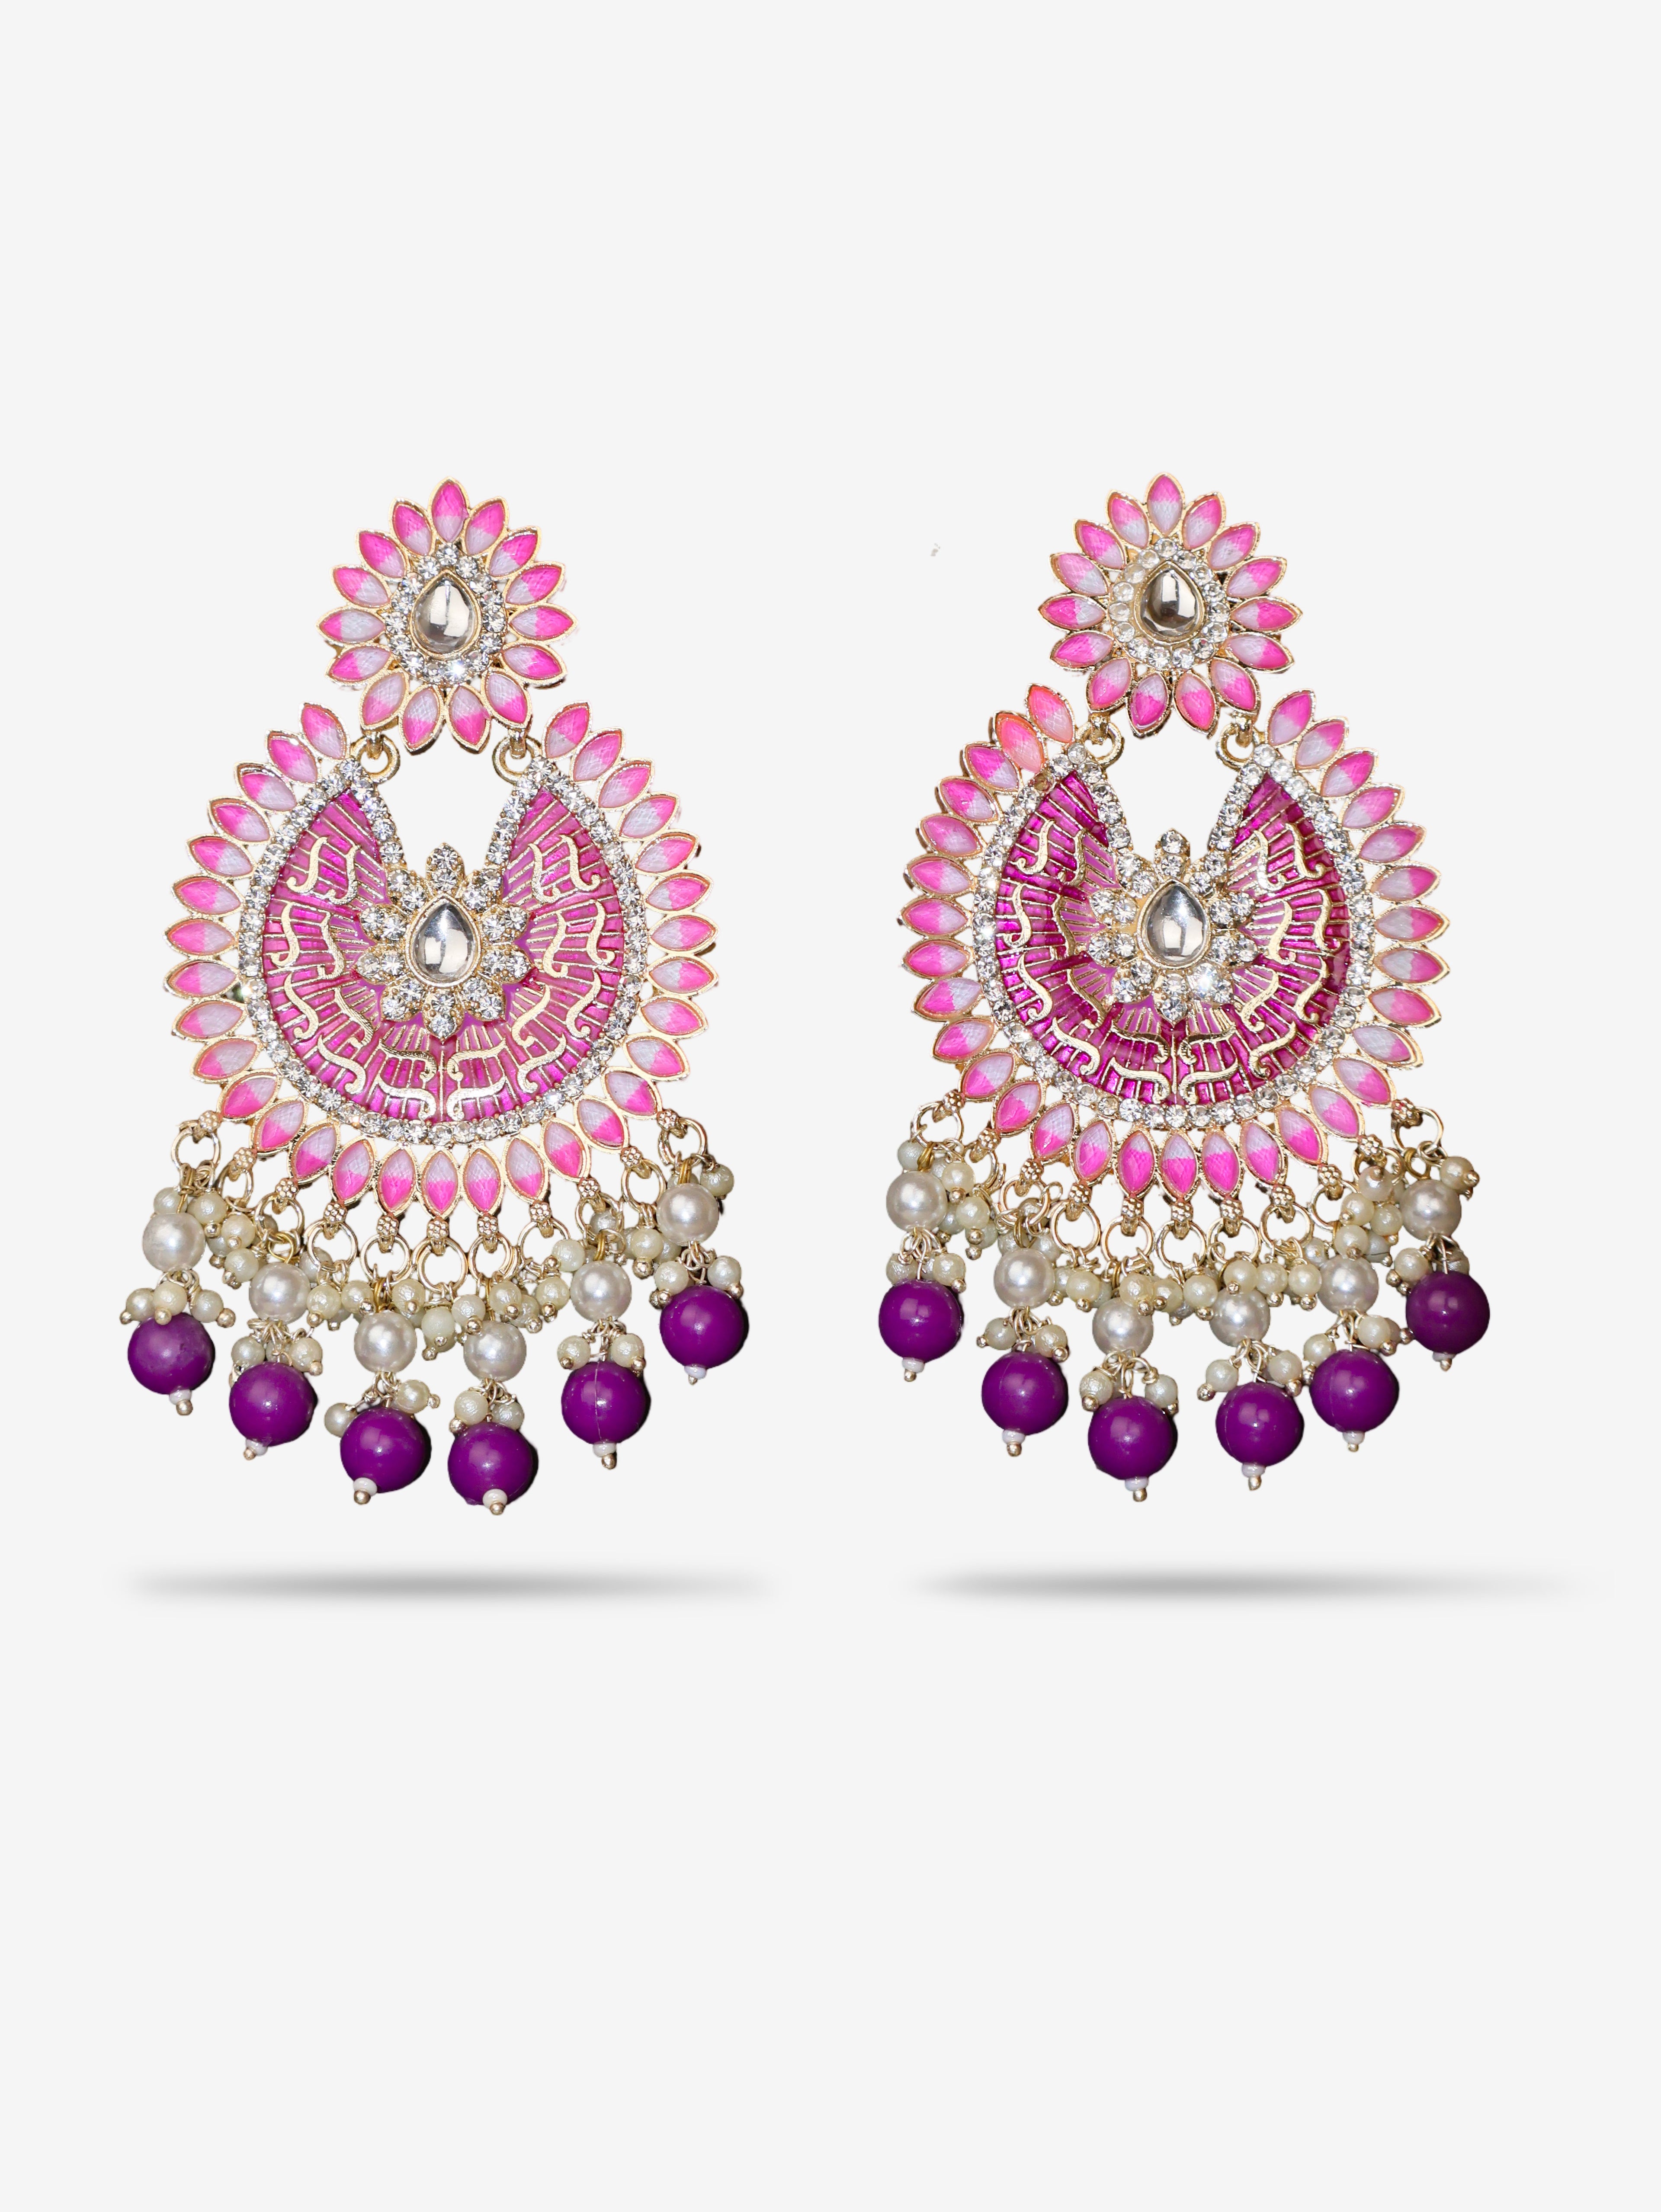 Delicate Pearl &amp; Rhinestone Chandelier Earrings for Women by Shreekama Purple Fashion Jewelry for Party Festival Wedding Occasion in Noida